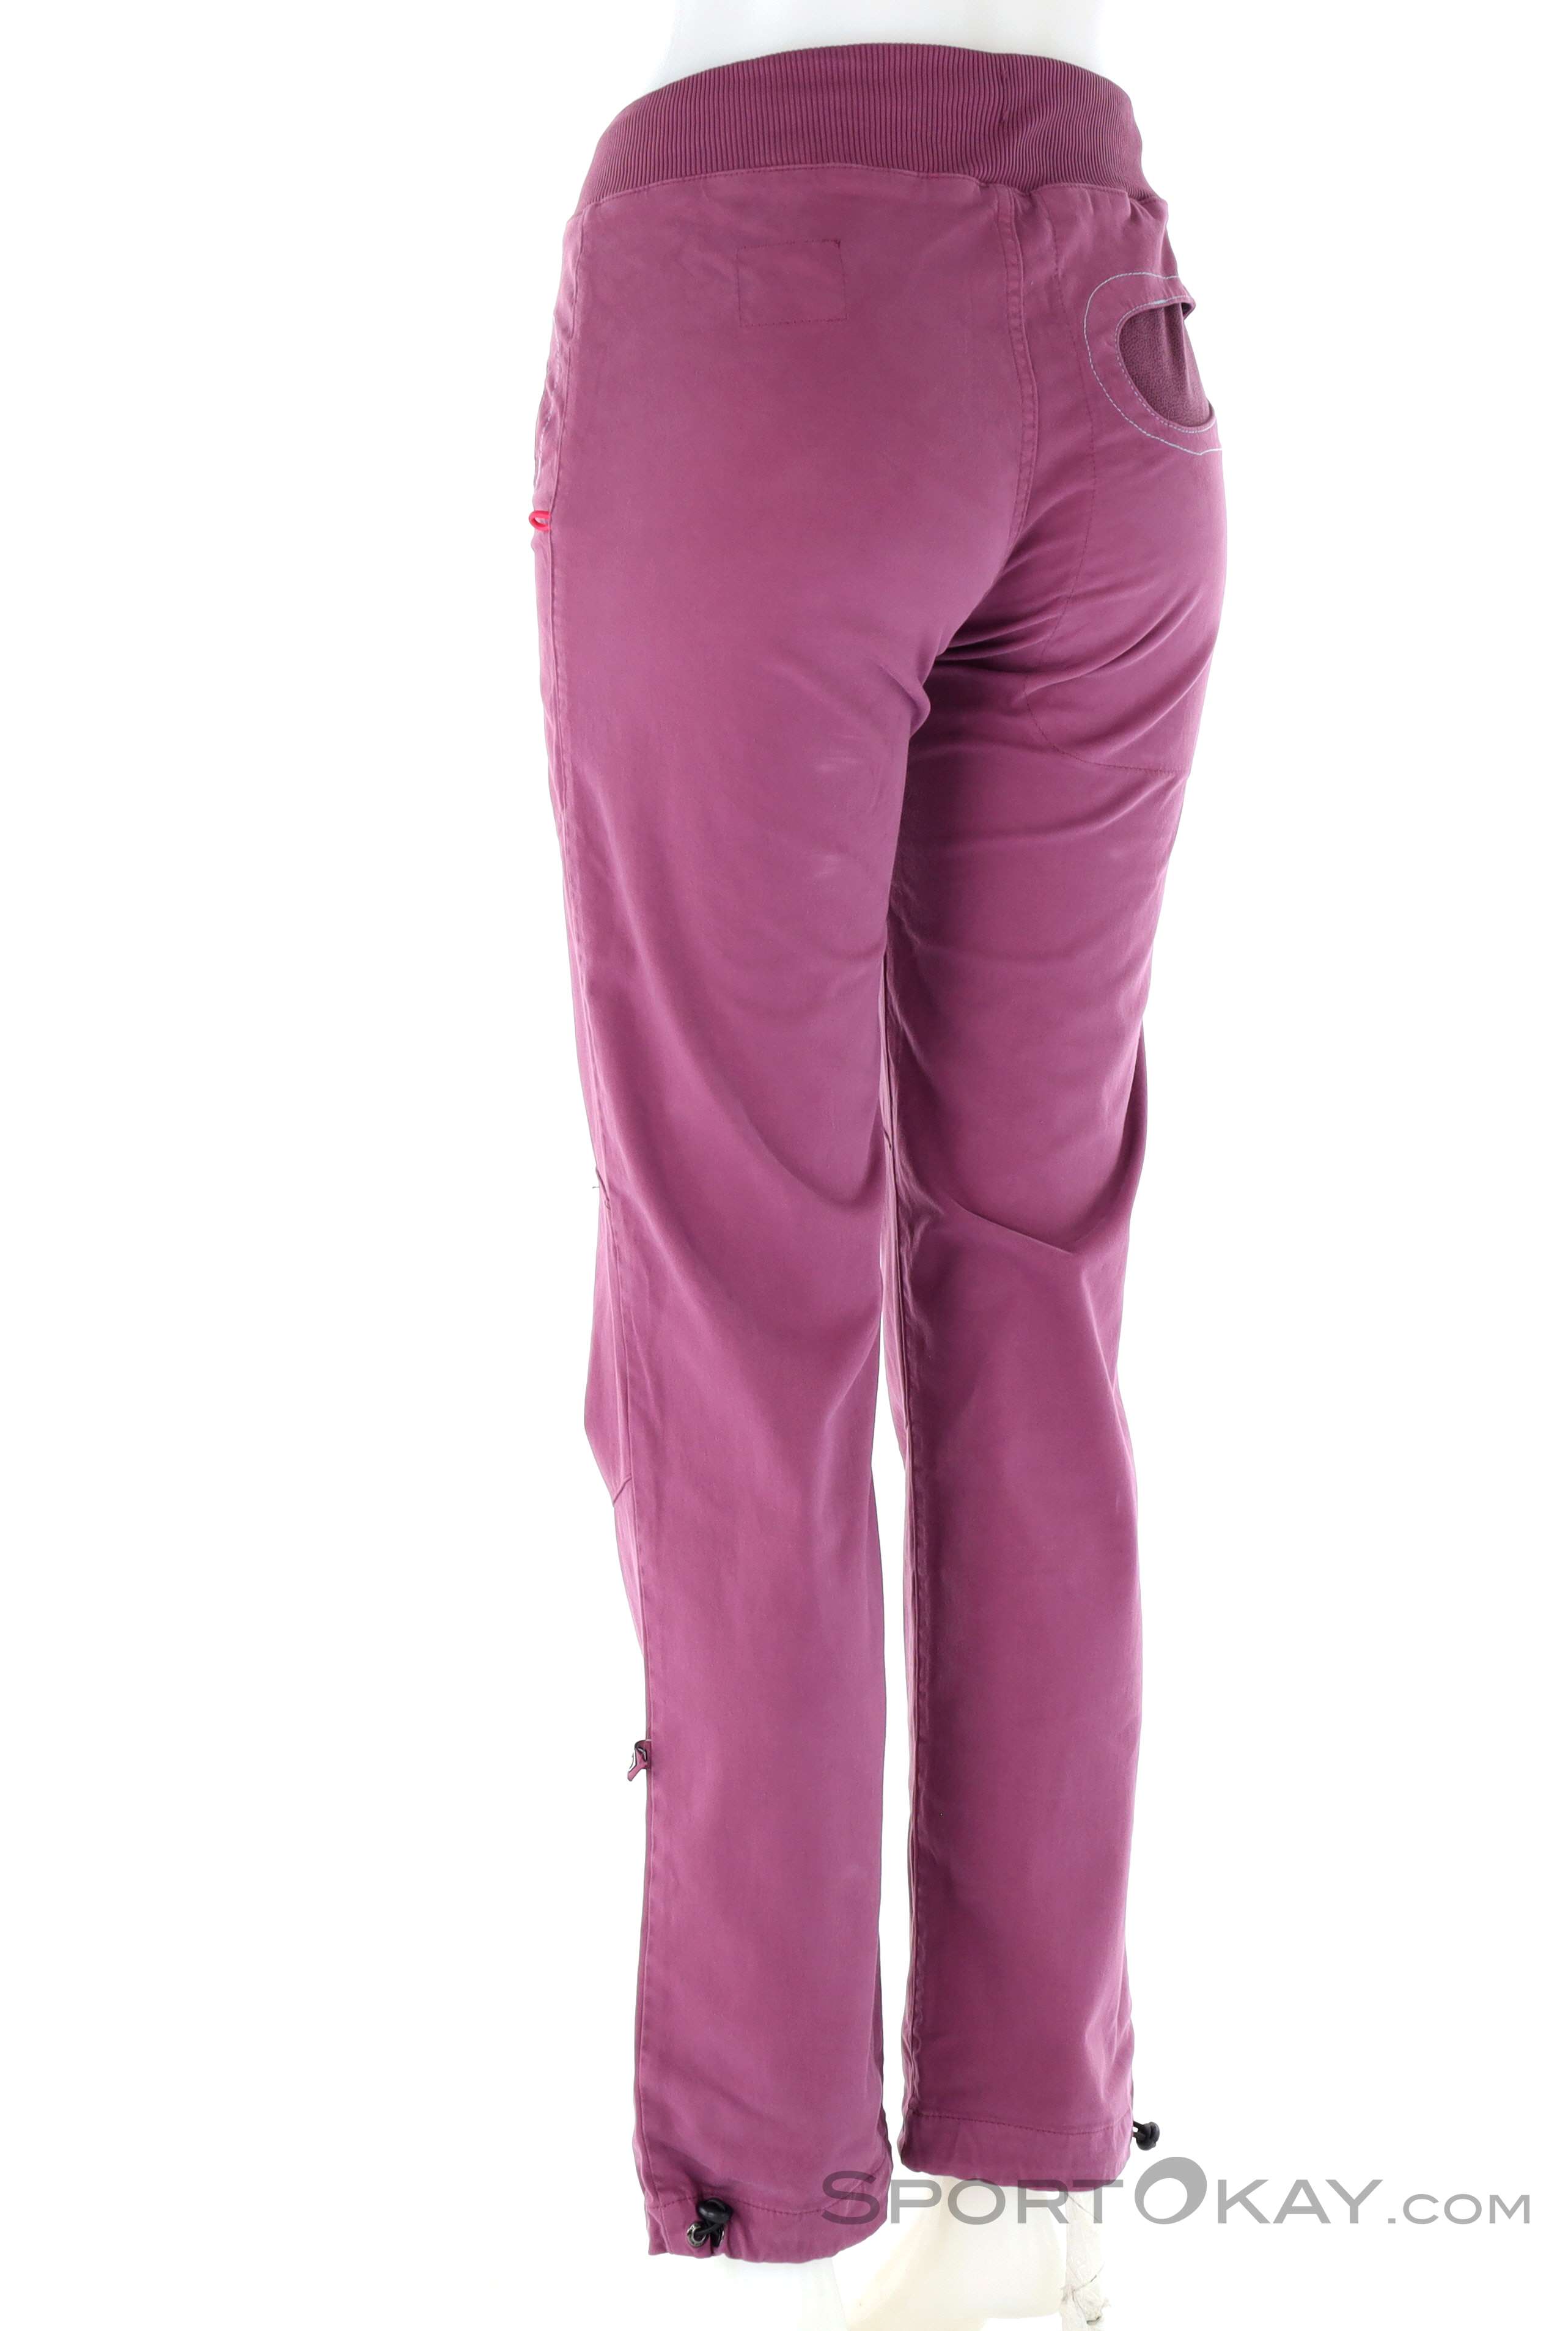 E9 Onda Womens Climbing Pants - Pants - Outdoor Clothing - Outdoor - All